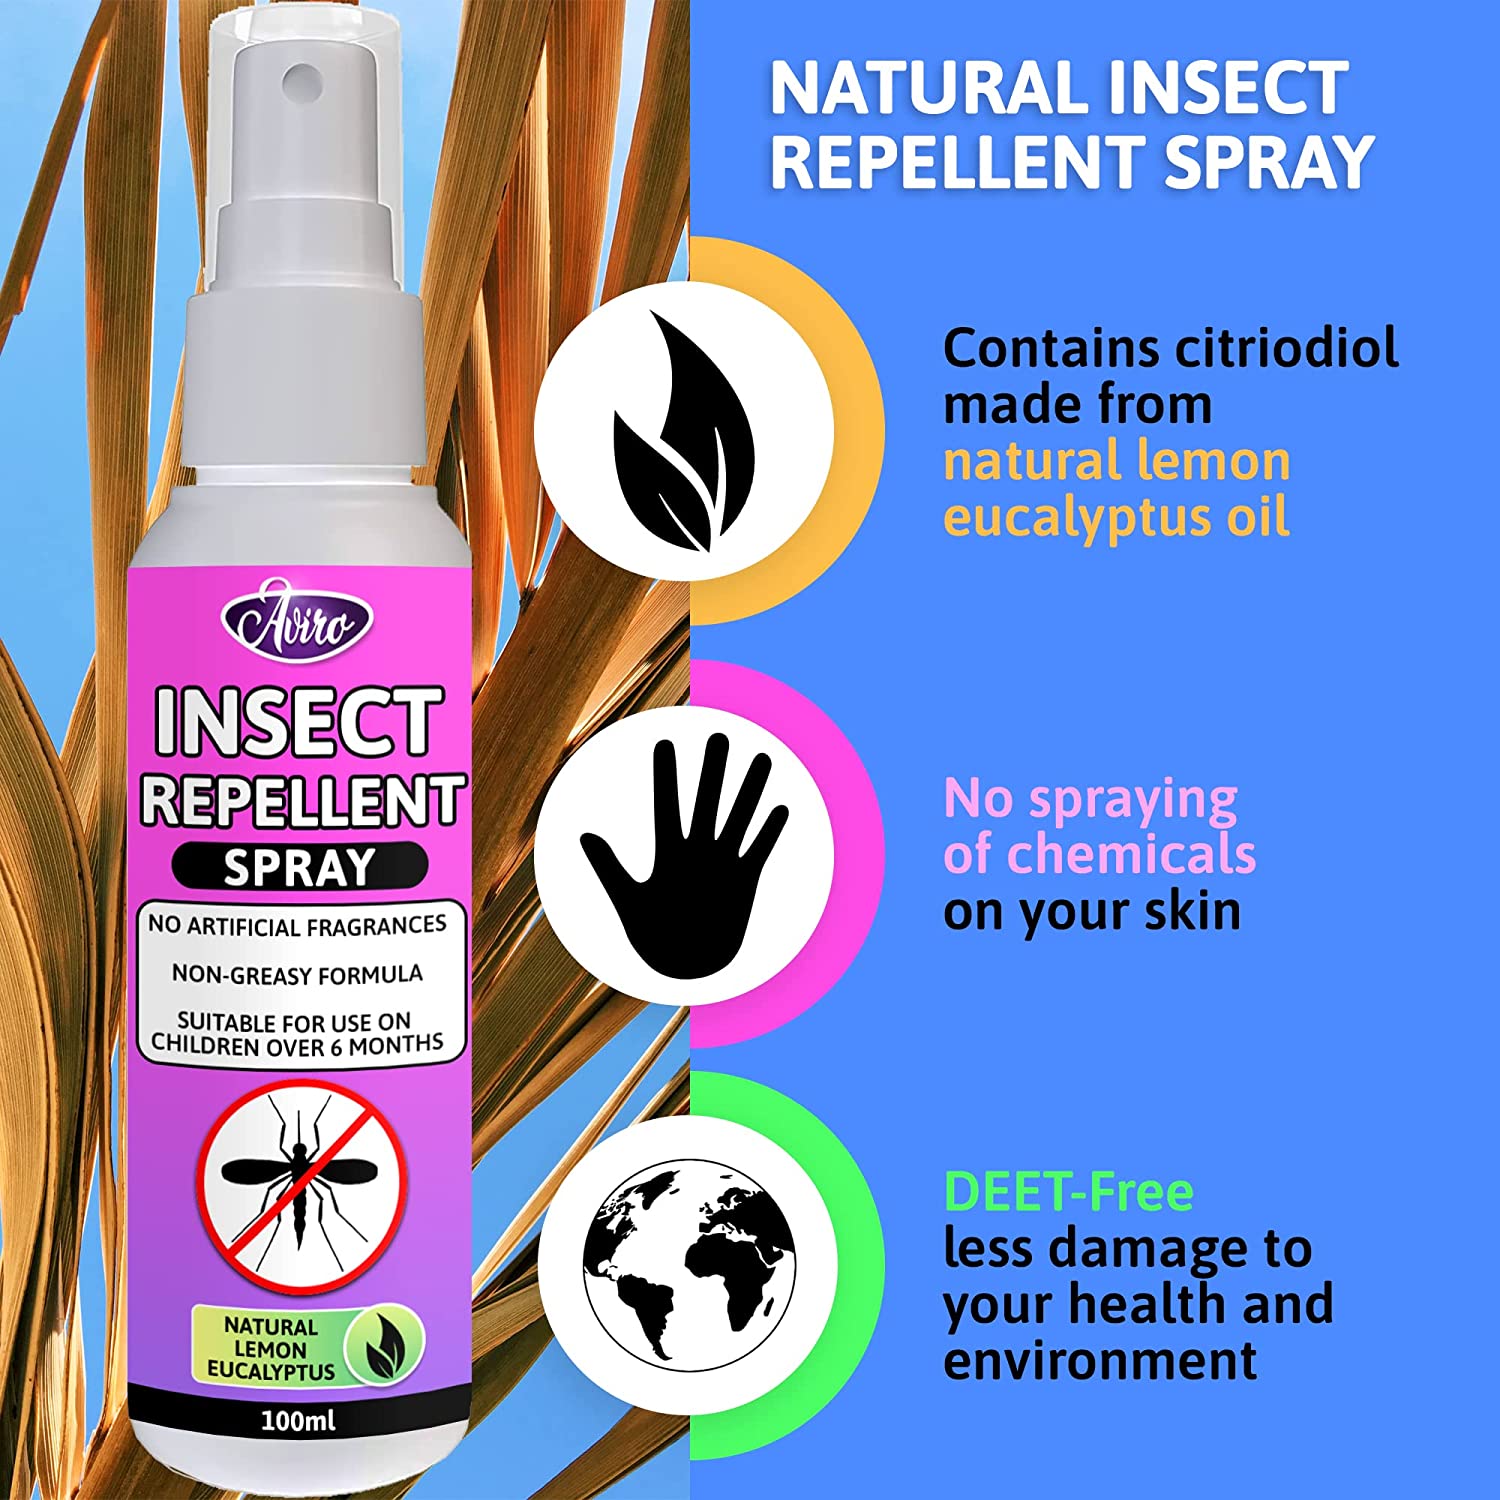 aviro-insect-repellent-spray-100-ml-product-benefits